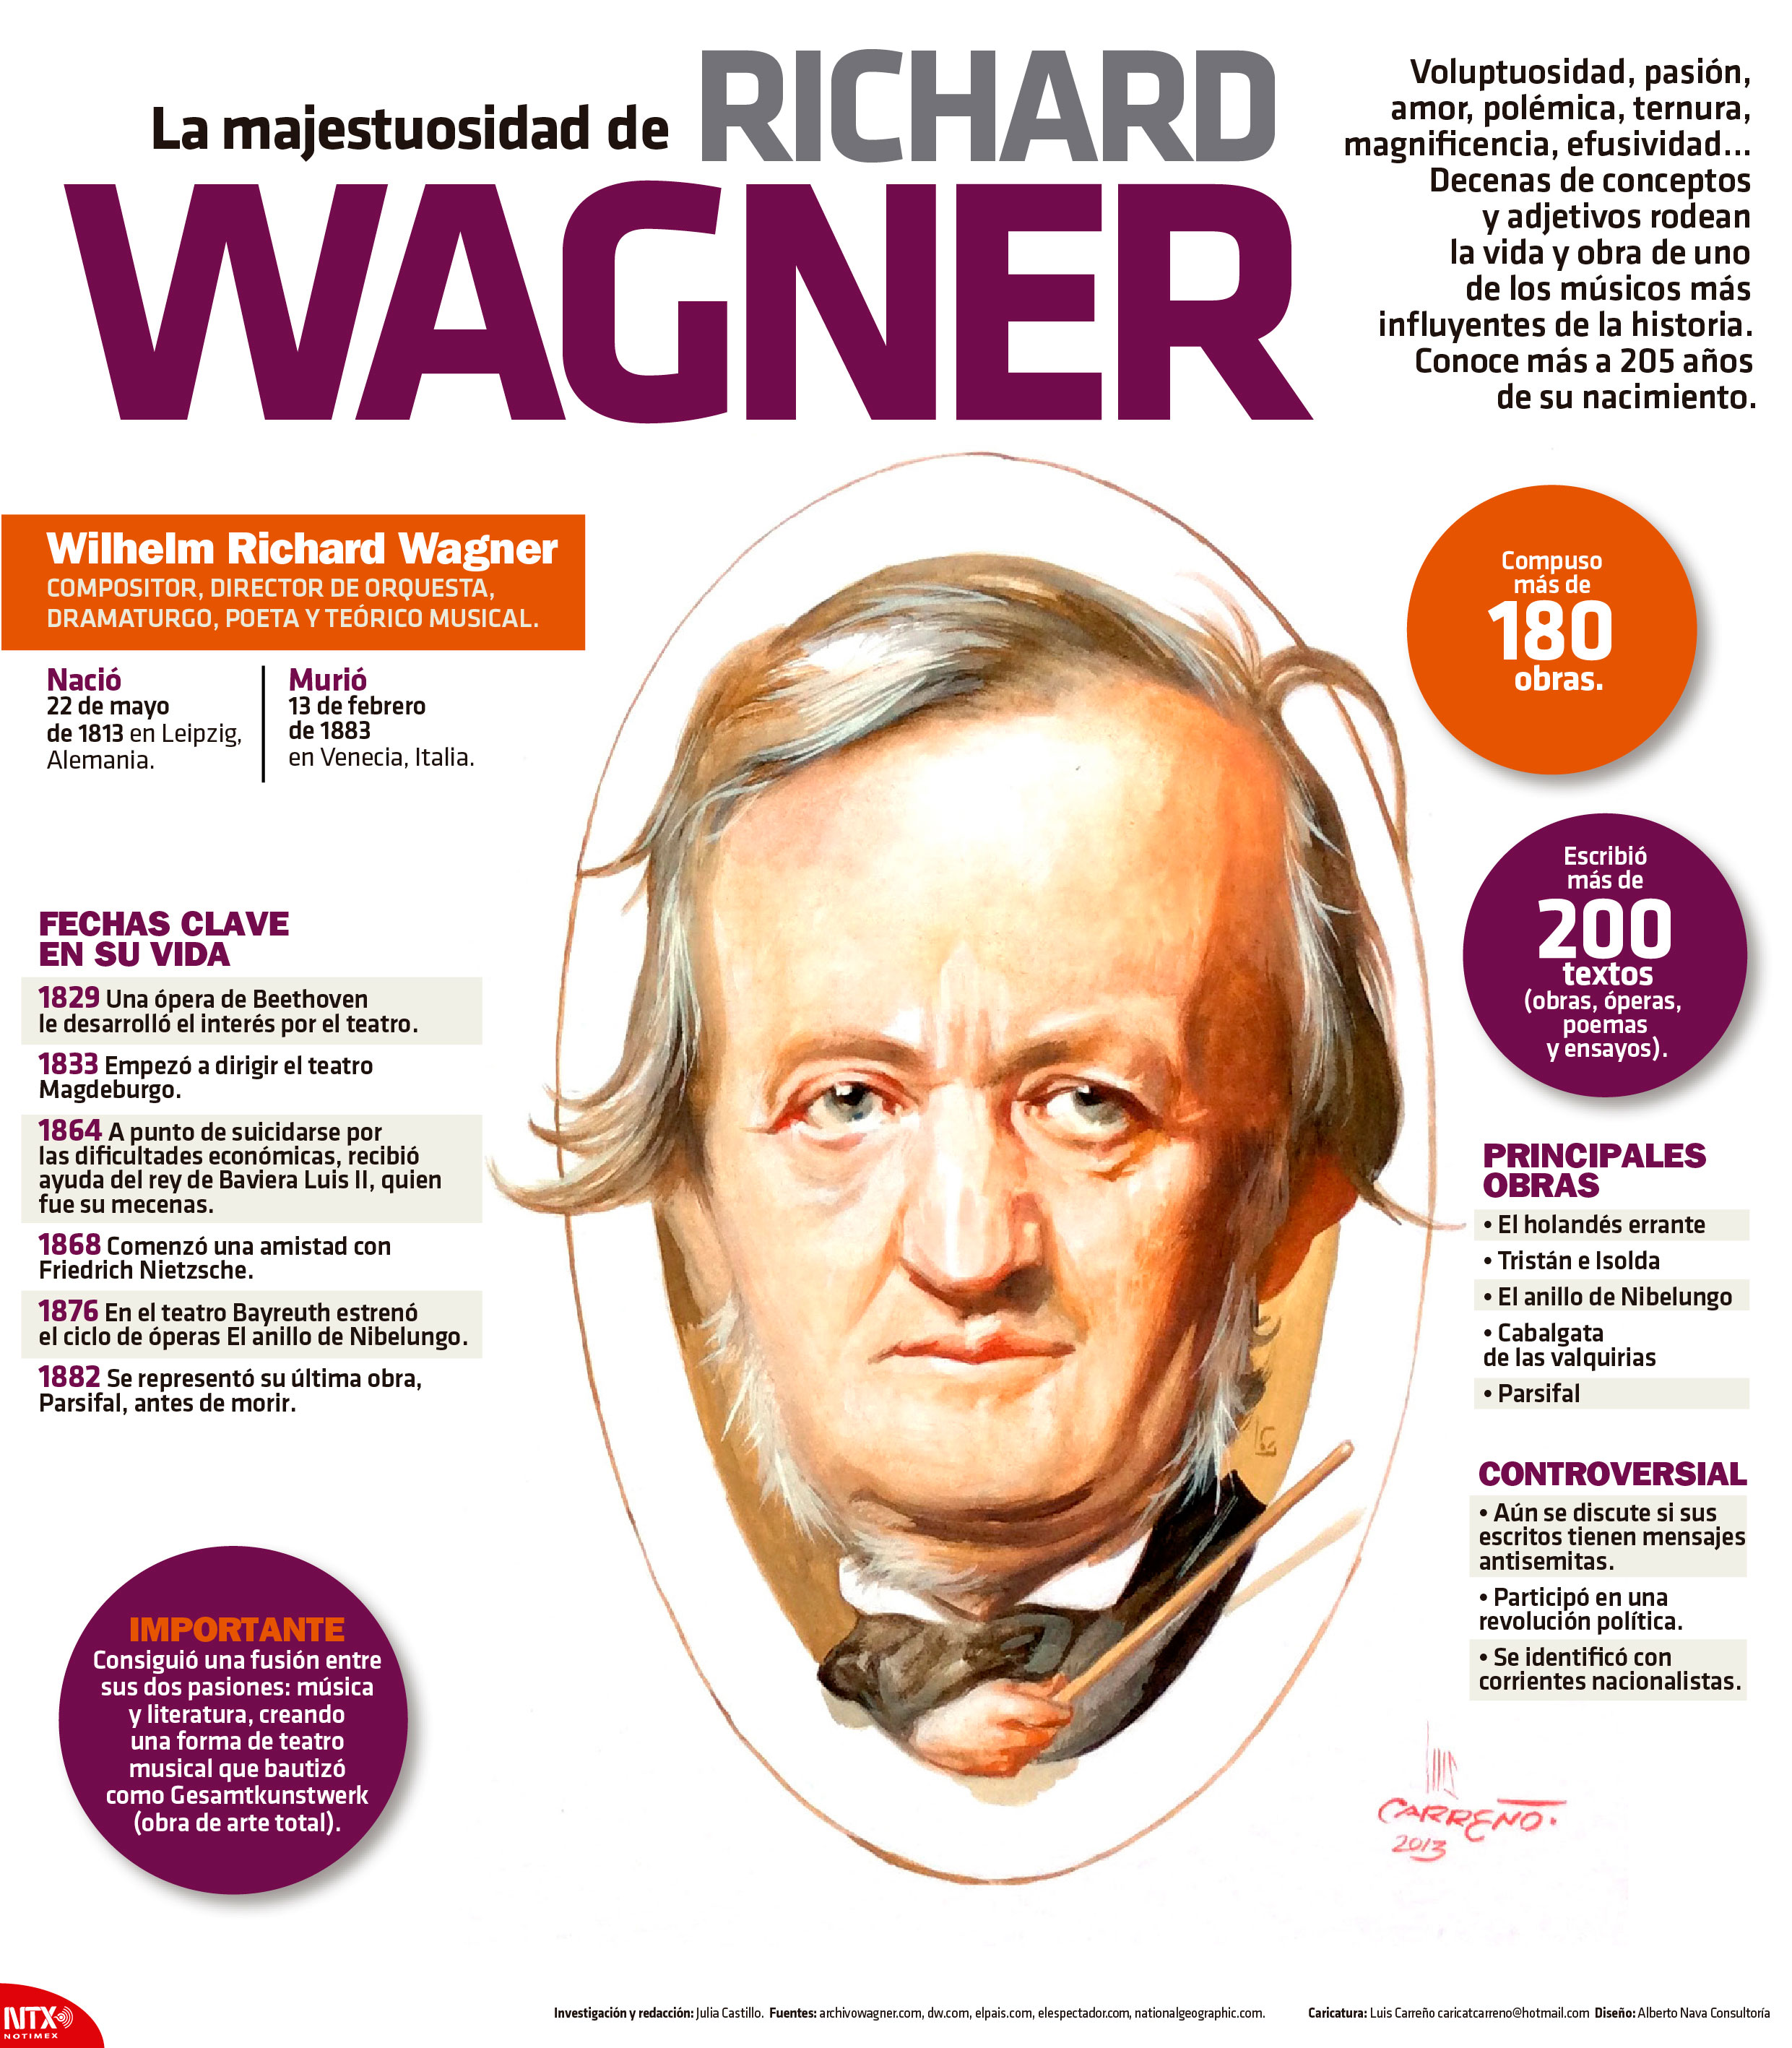 La majestuosidad de Richard Wagner 